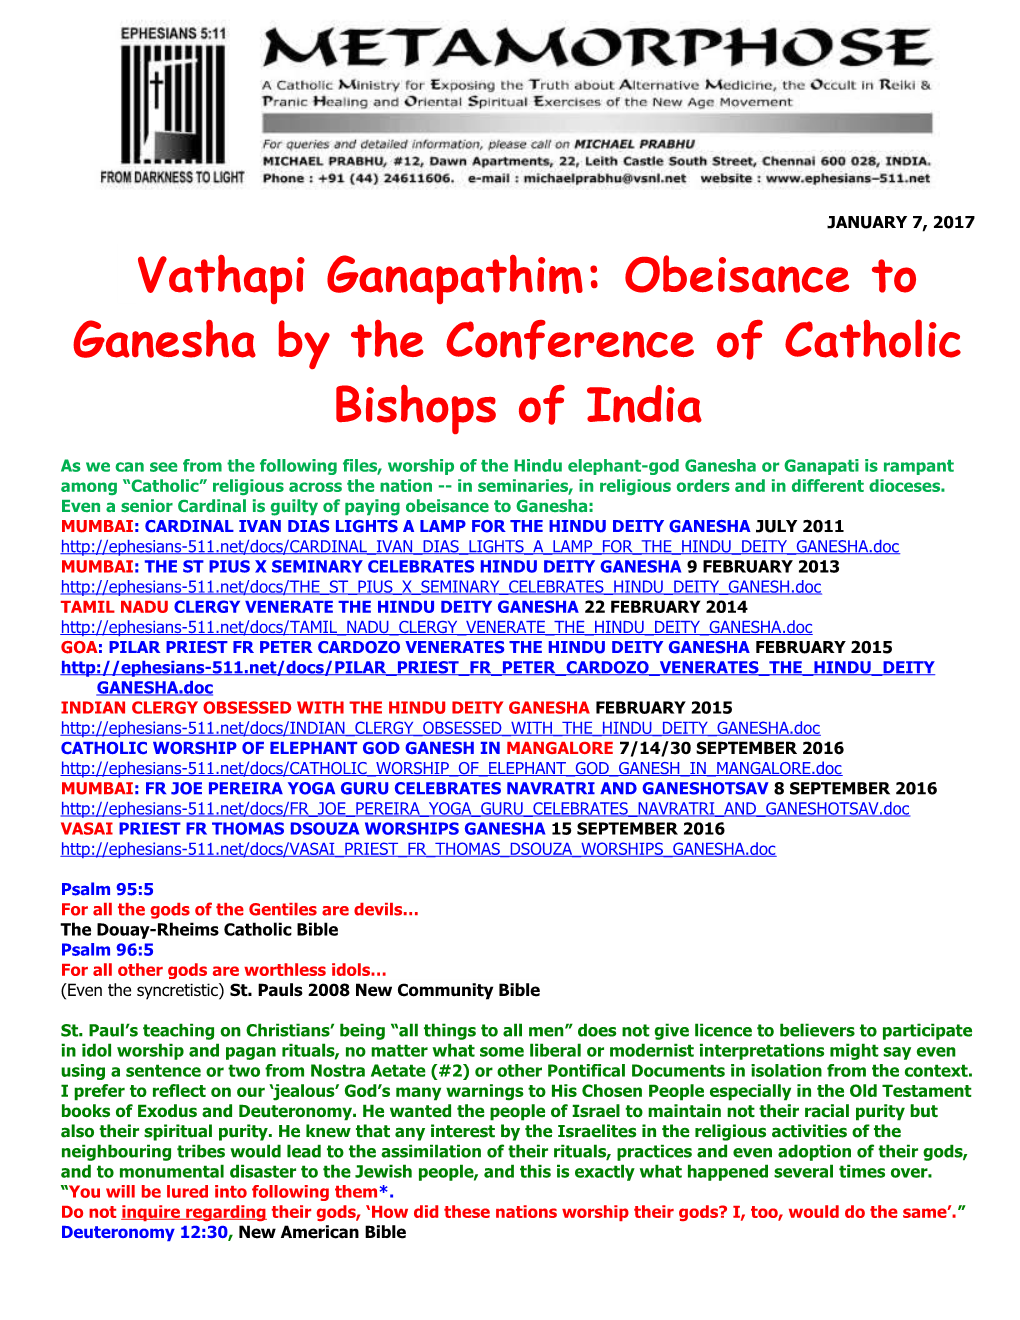 Vathapi Ganapathim: Obeisance to Ganesha by the Conference of Catholic Bishops of India